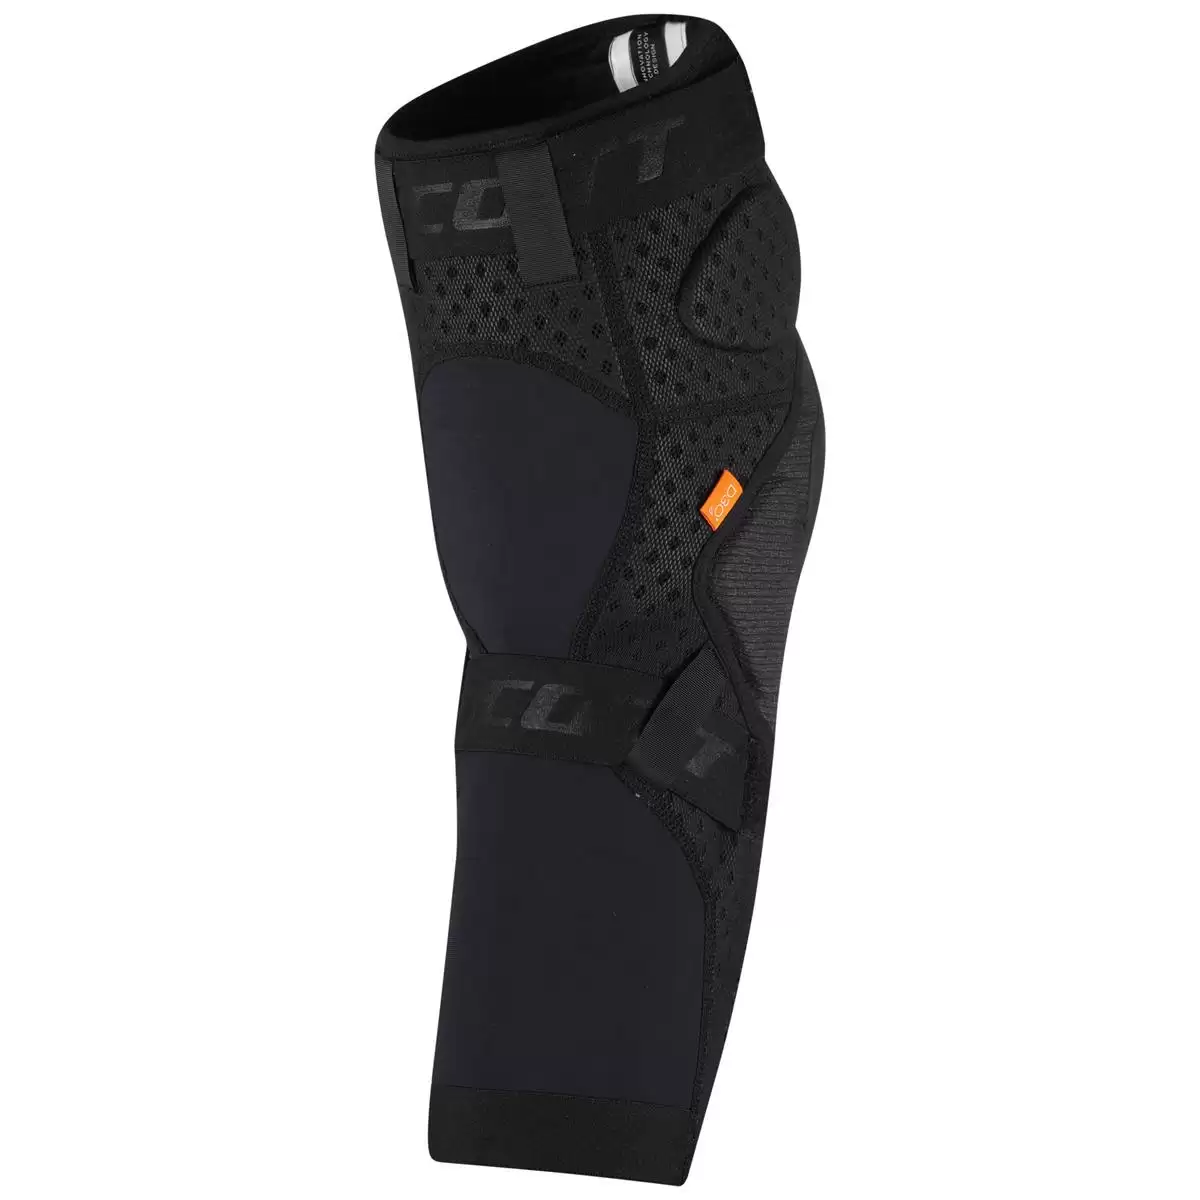 Knee pads Softcon 2 Black/Grey - Size L #1